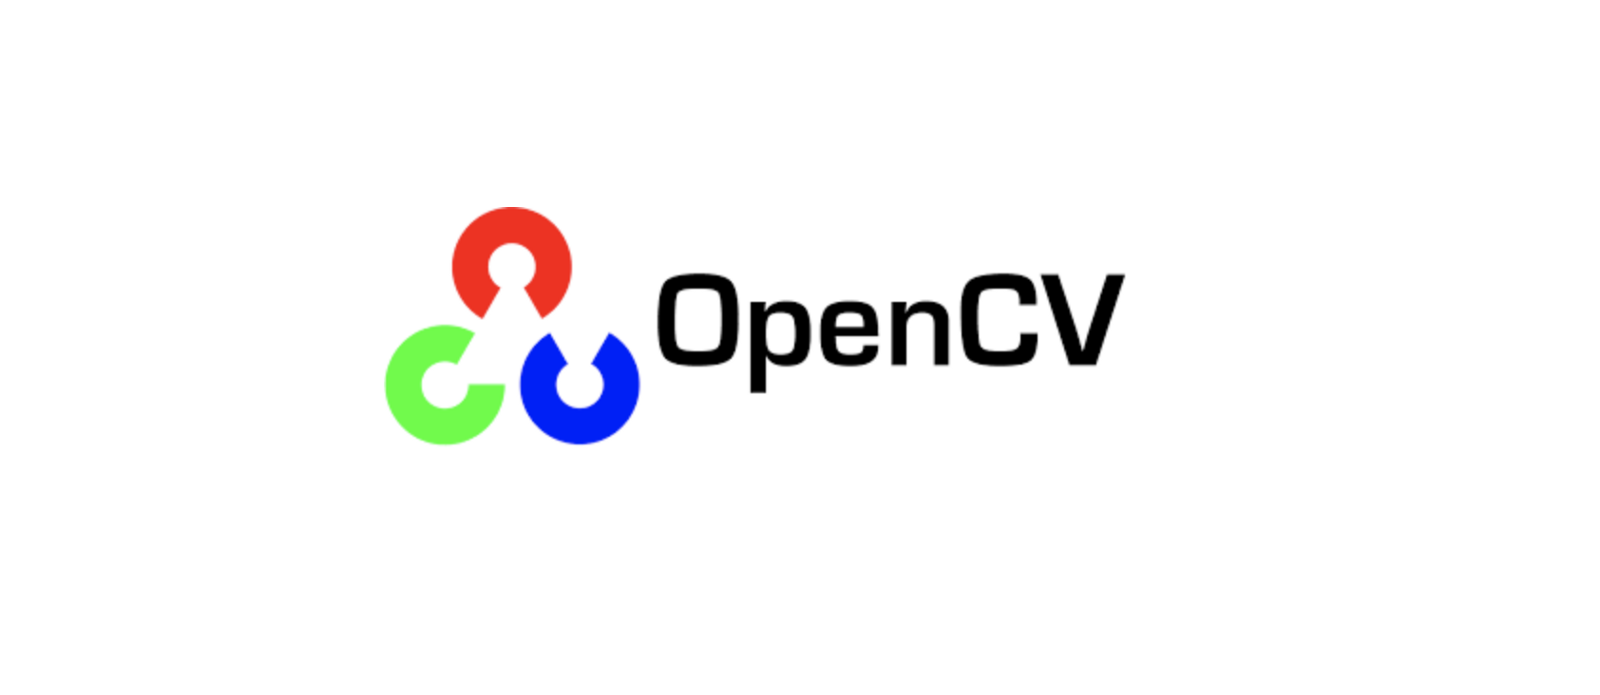 Come aprire un flusso video RTSP via python ed OpenCV